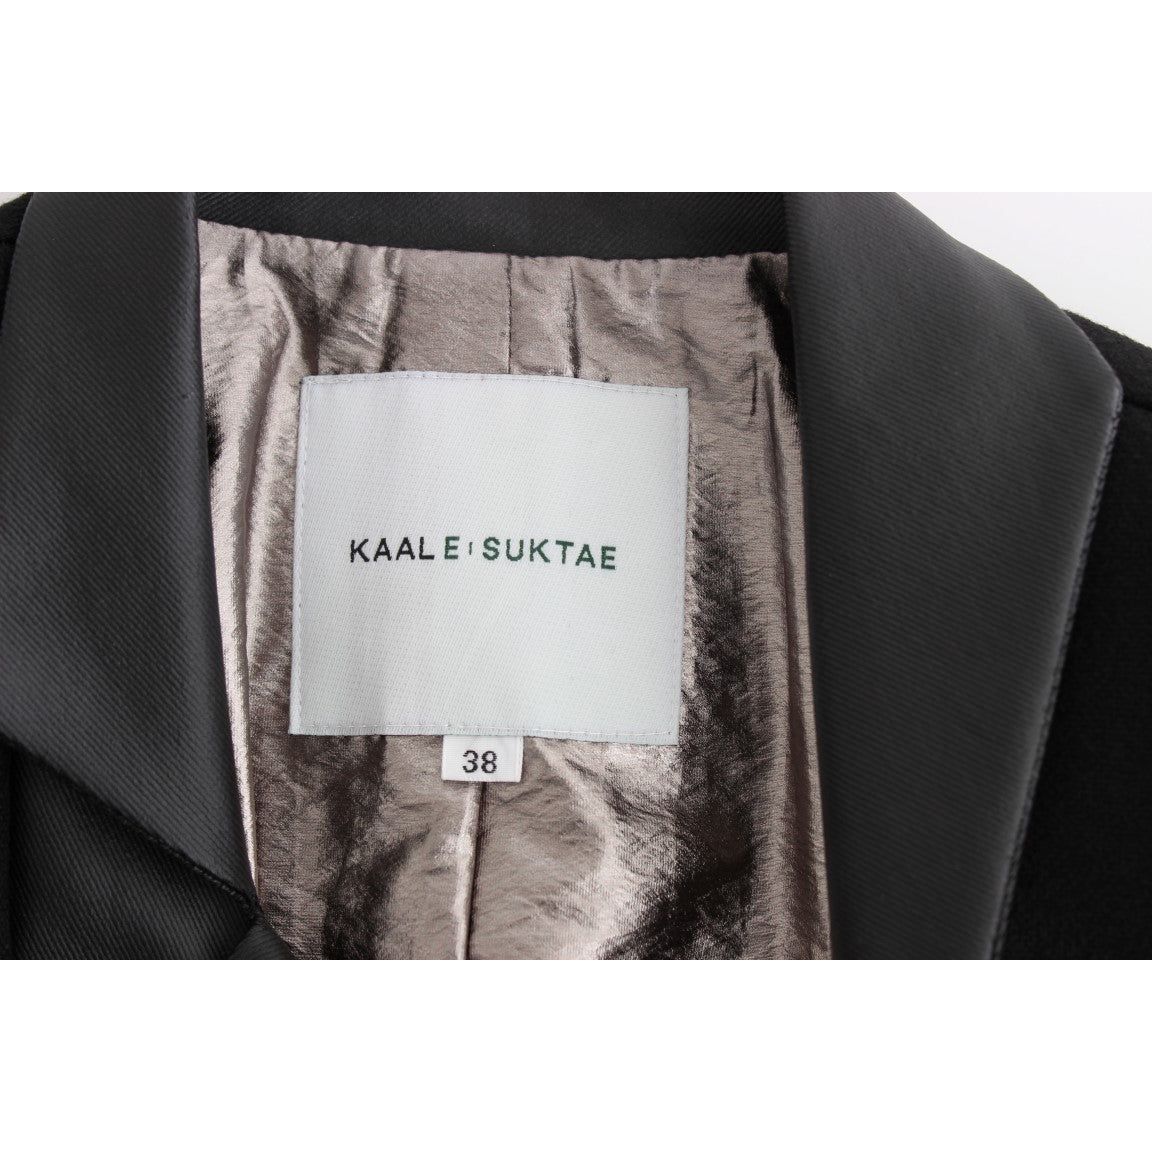 KAALE SUKTAE Elegant Monochrome Zippered Blazer Jacket black-short-blazer-coat-biker-jacket Coats & Jackets